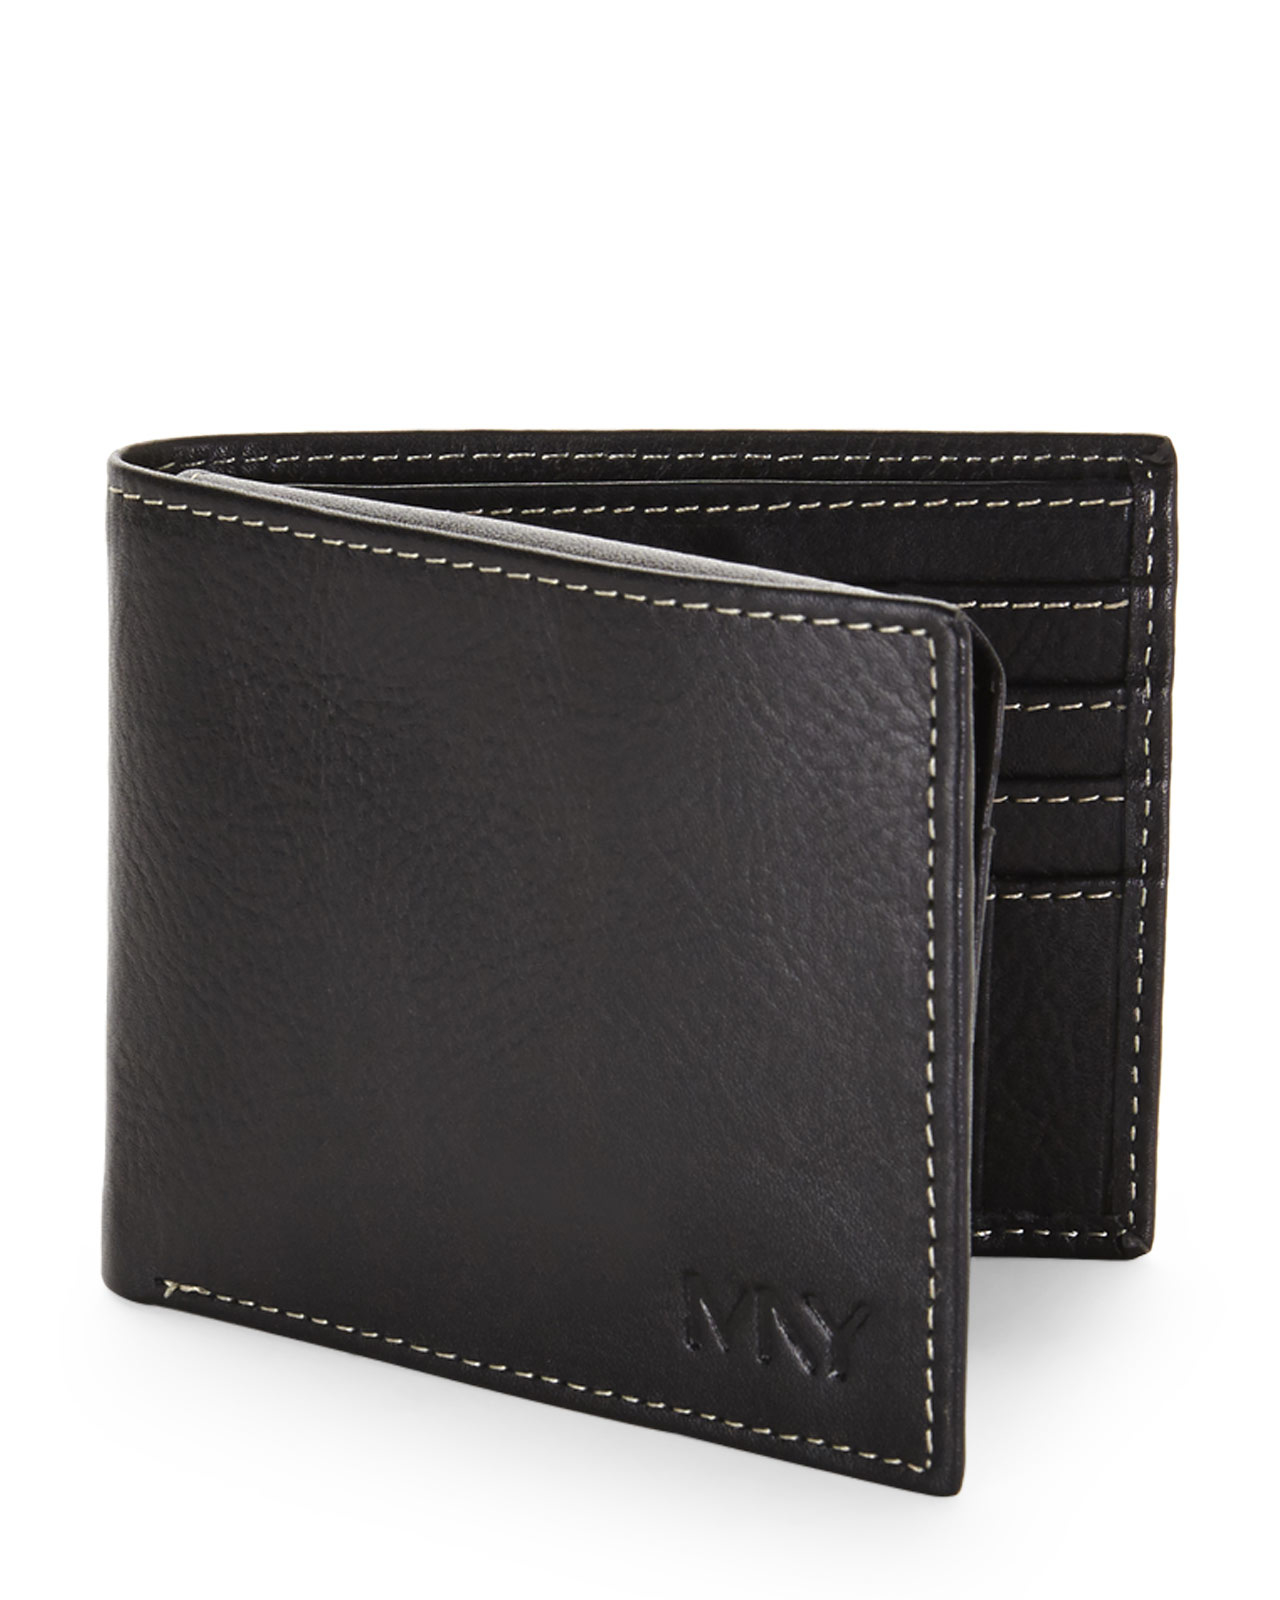 Lyst - Marc New York Black Sergio Passcase Wallet in Black for Men